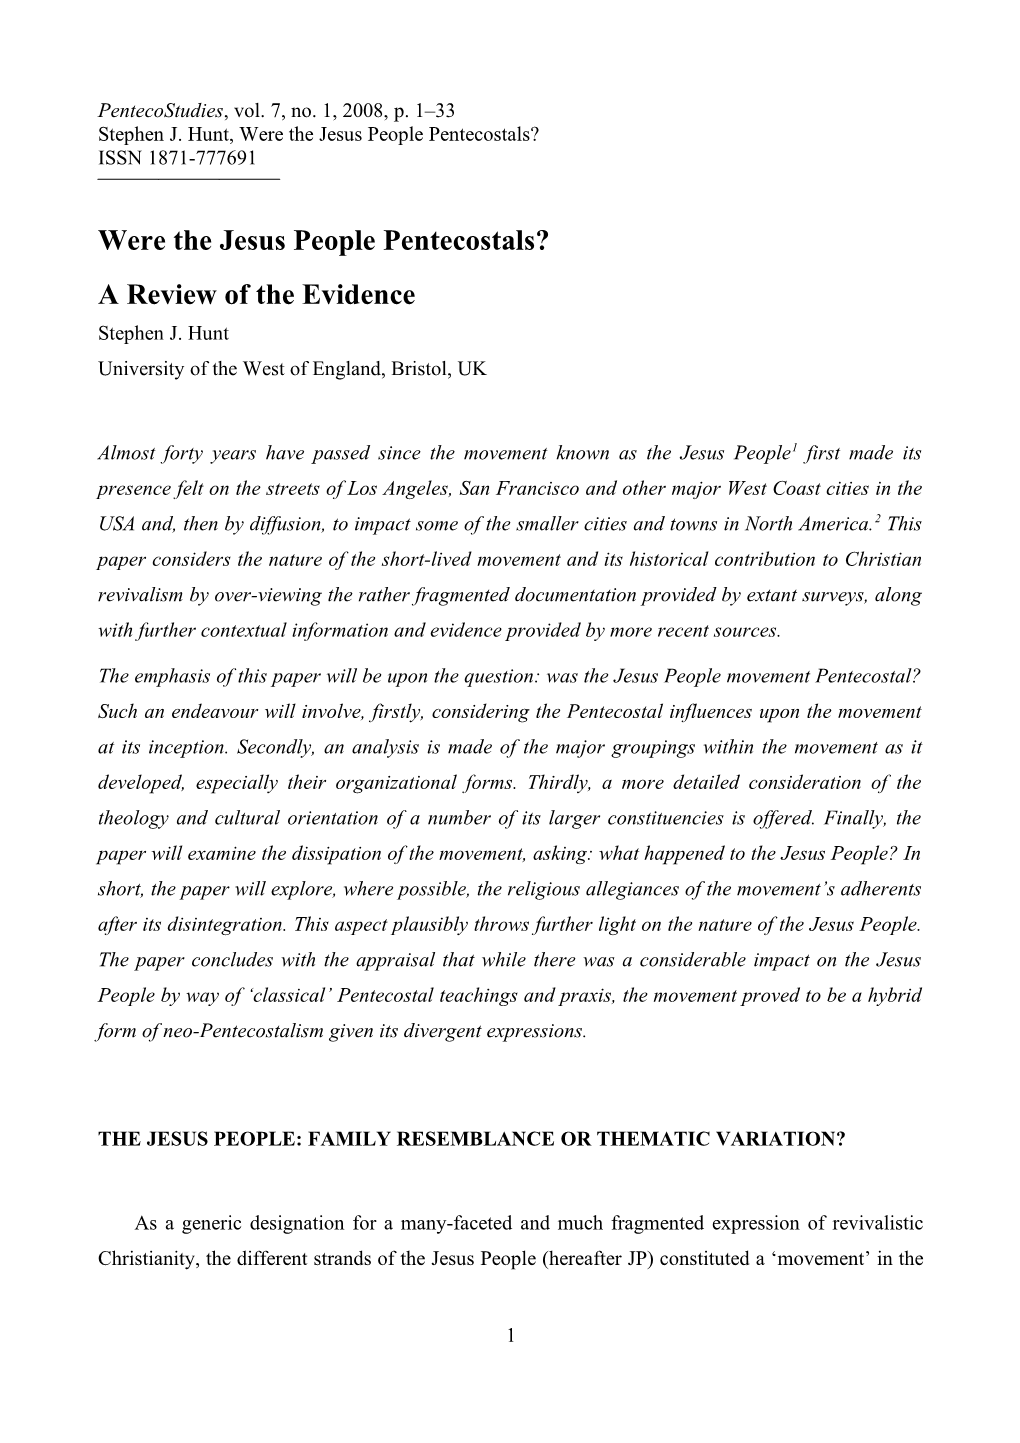 Were the Jesus People Pentecostals? ISSN 1871-777691